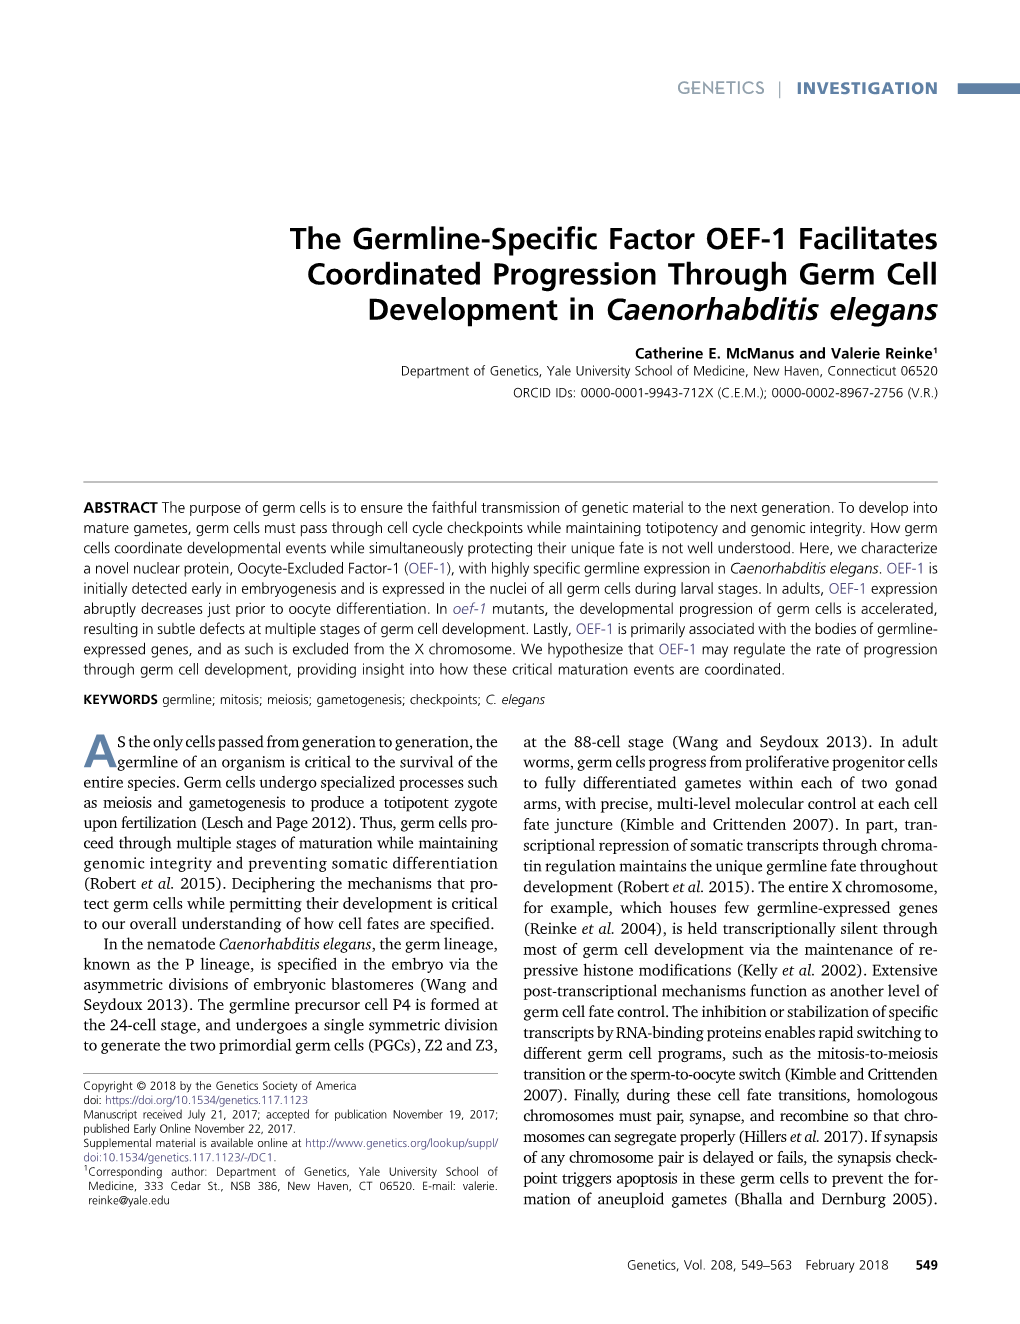 The Germline-Specific Factor OEF-1 Facilitates Coordinated Progression